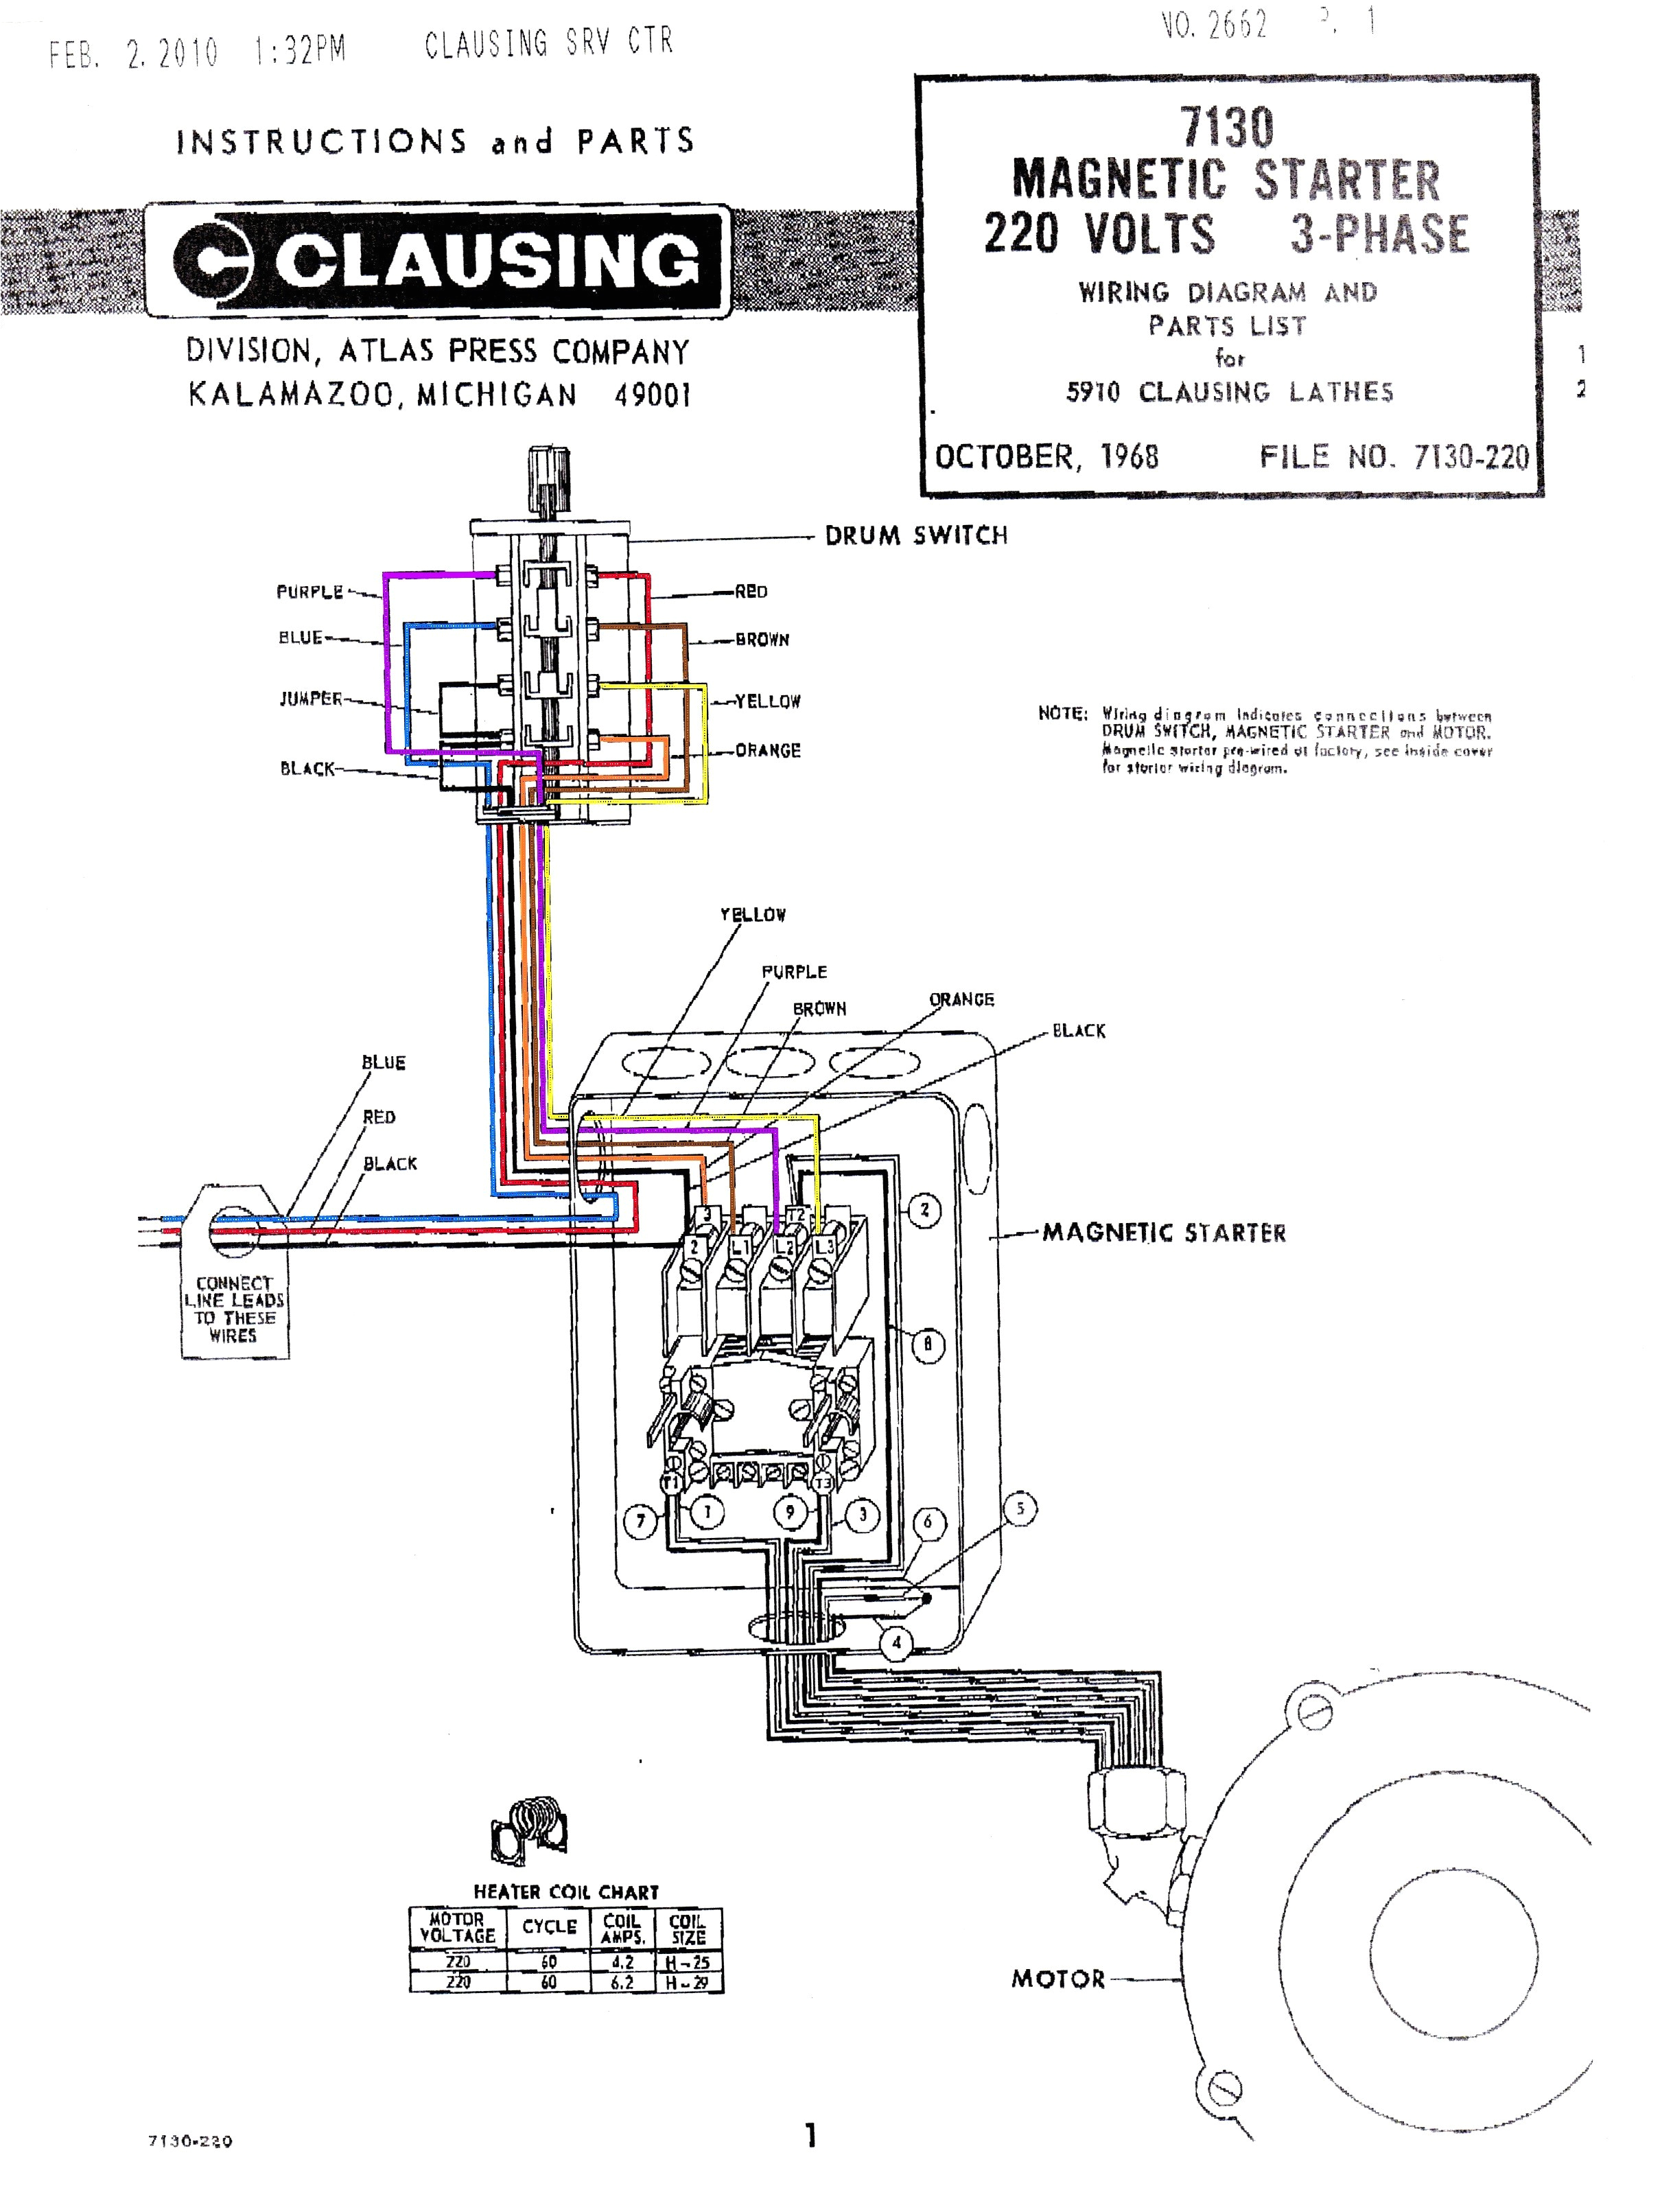 diagram allen wiring bradley 1232x wiring diagramallen dley vfd wiring diagram wiring diagram dataallen bradley motor